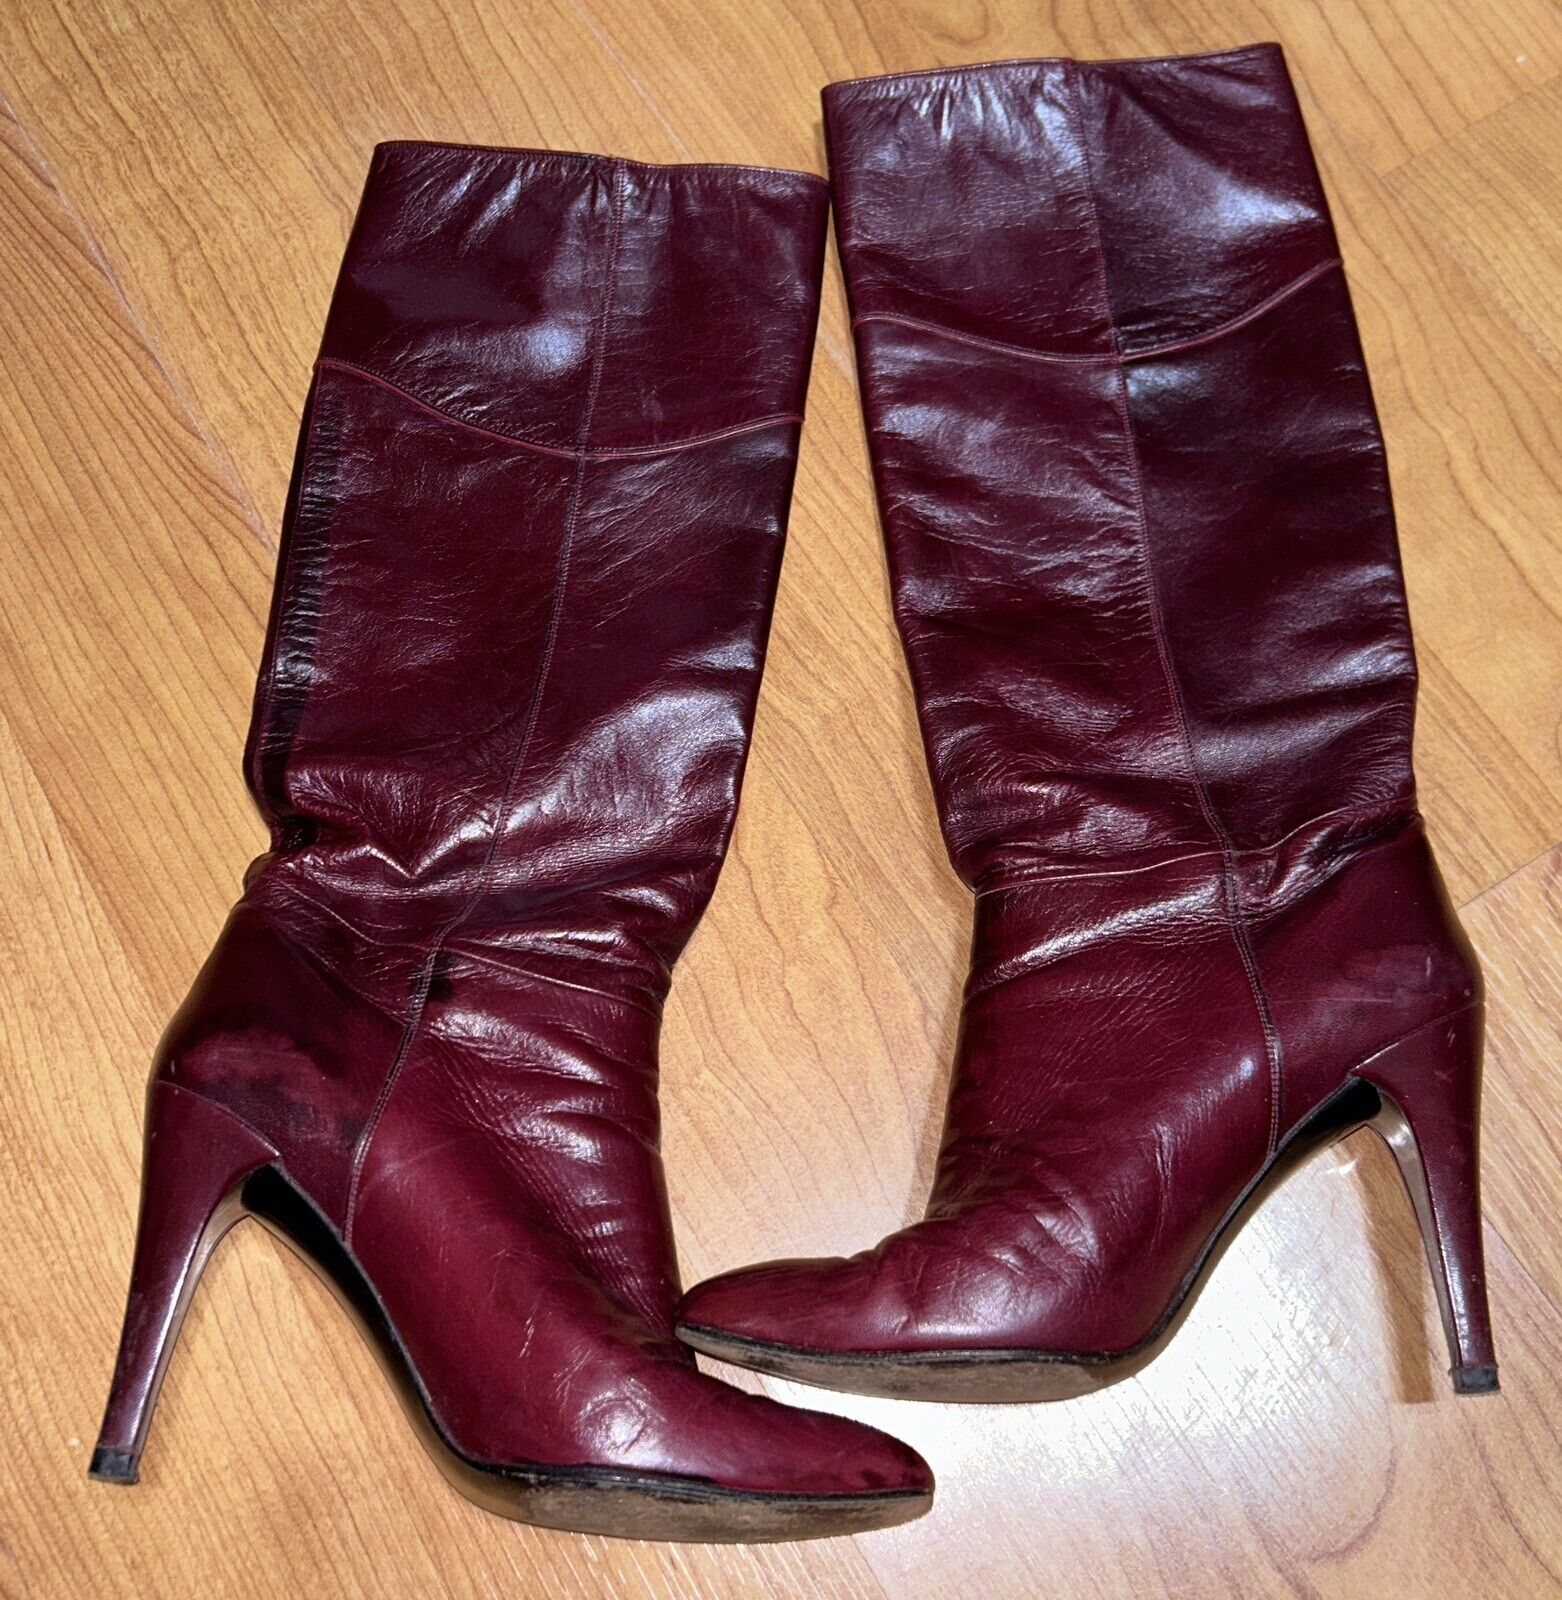 Vintage Charles Jourdan Italian Leather Burgundy Knee High Boots Size 6.5